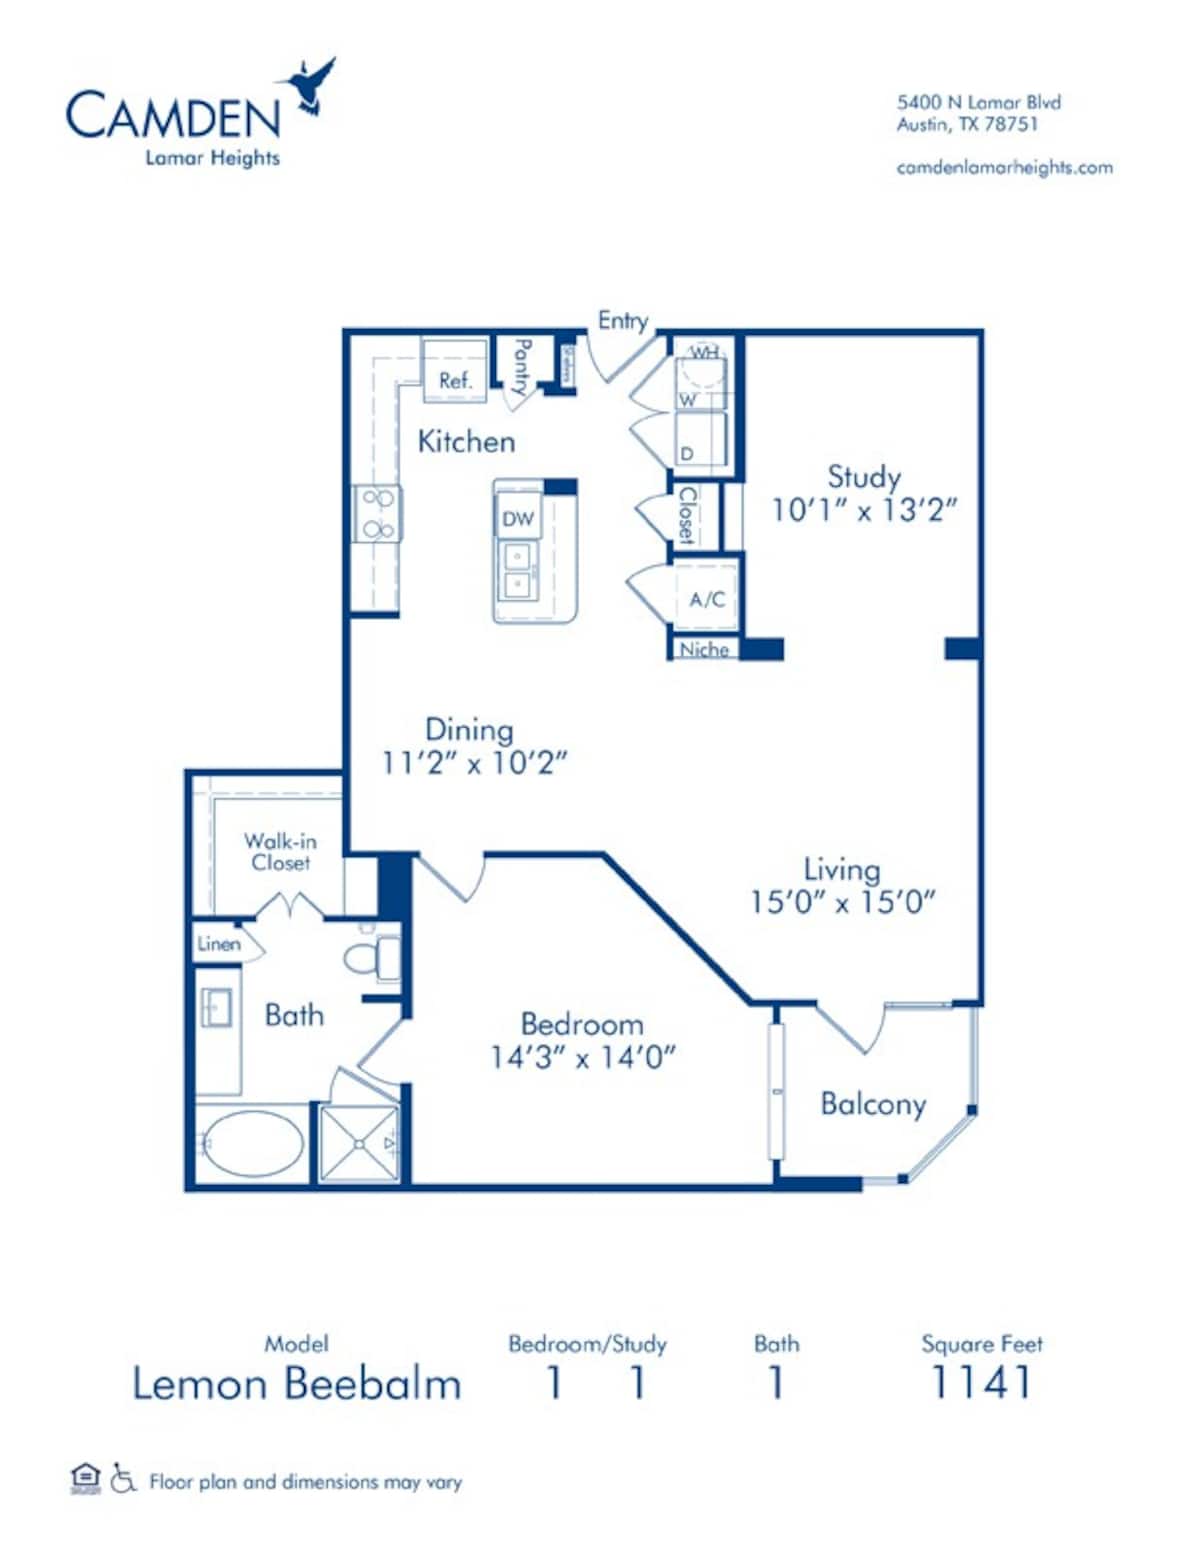 Floorplan diagram for Lemon Beebalm, showing 1 bedroom